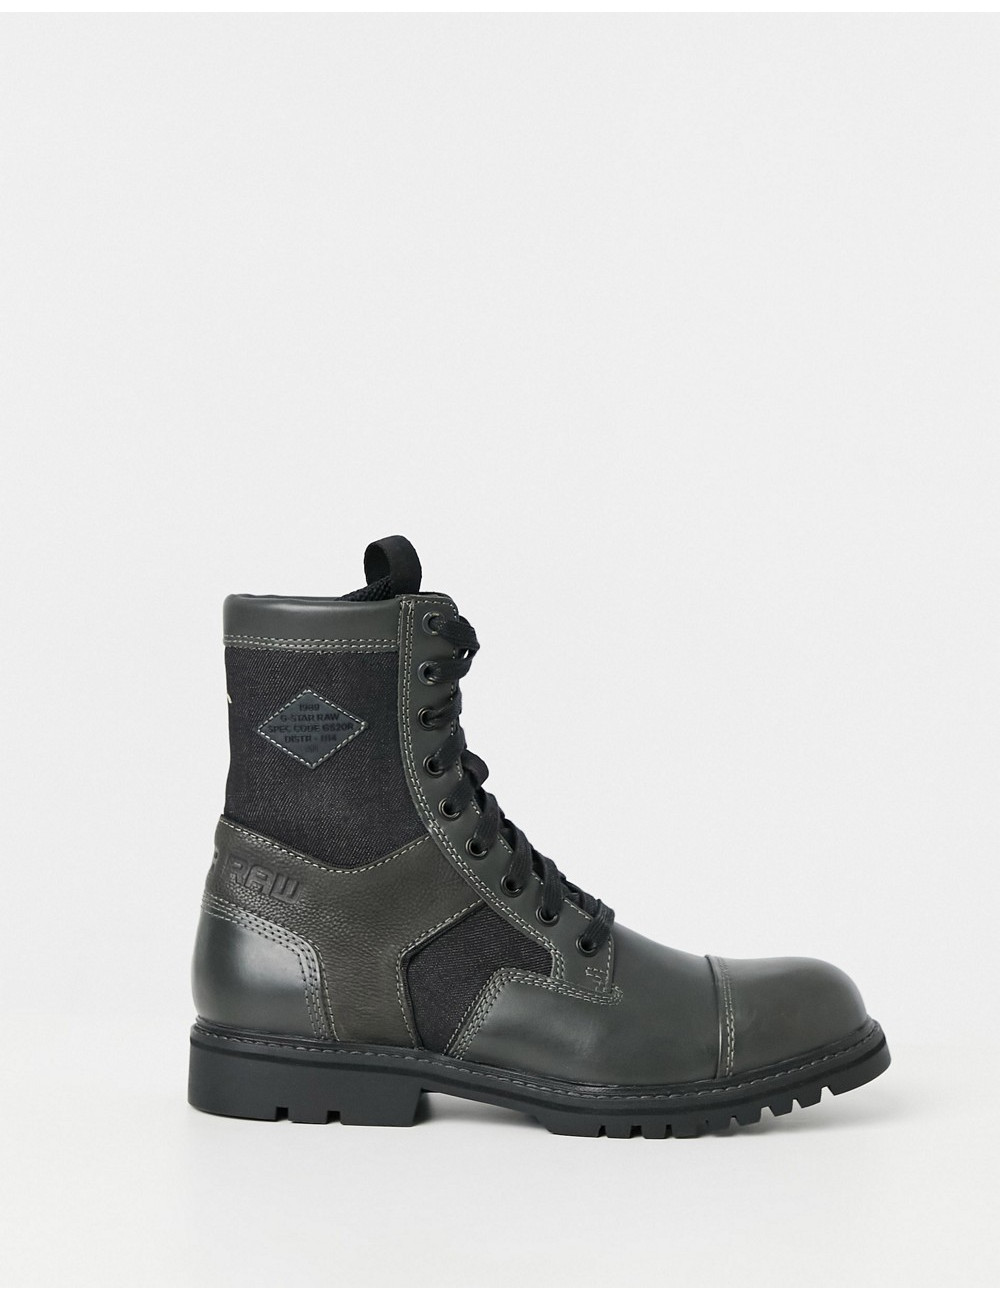 G-Star tendric boots